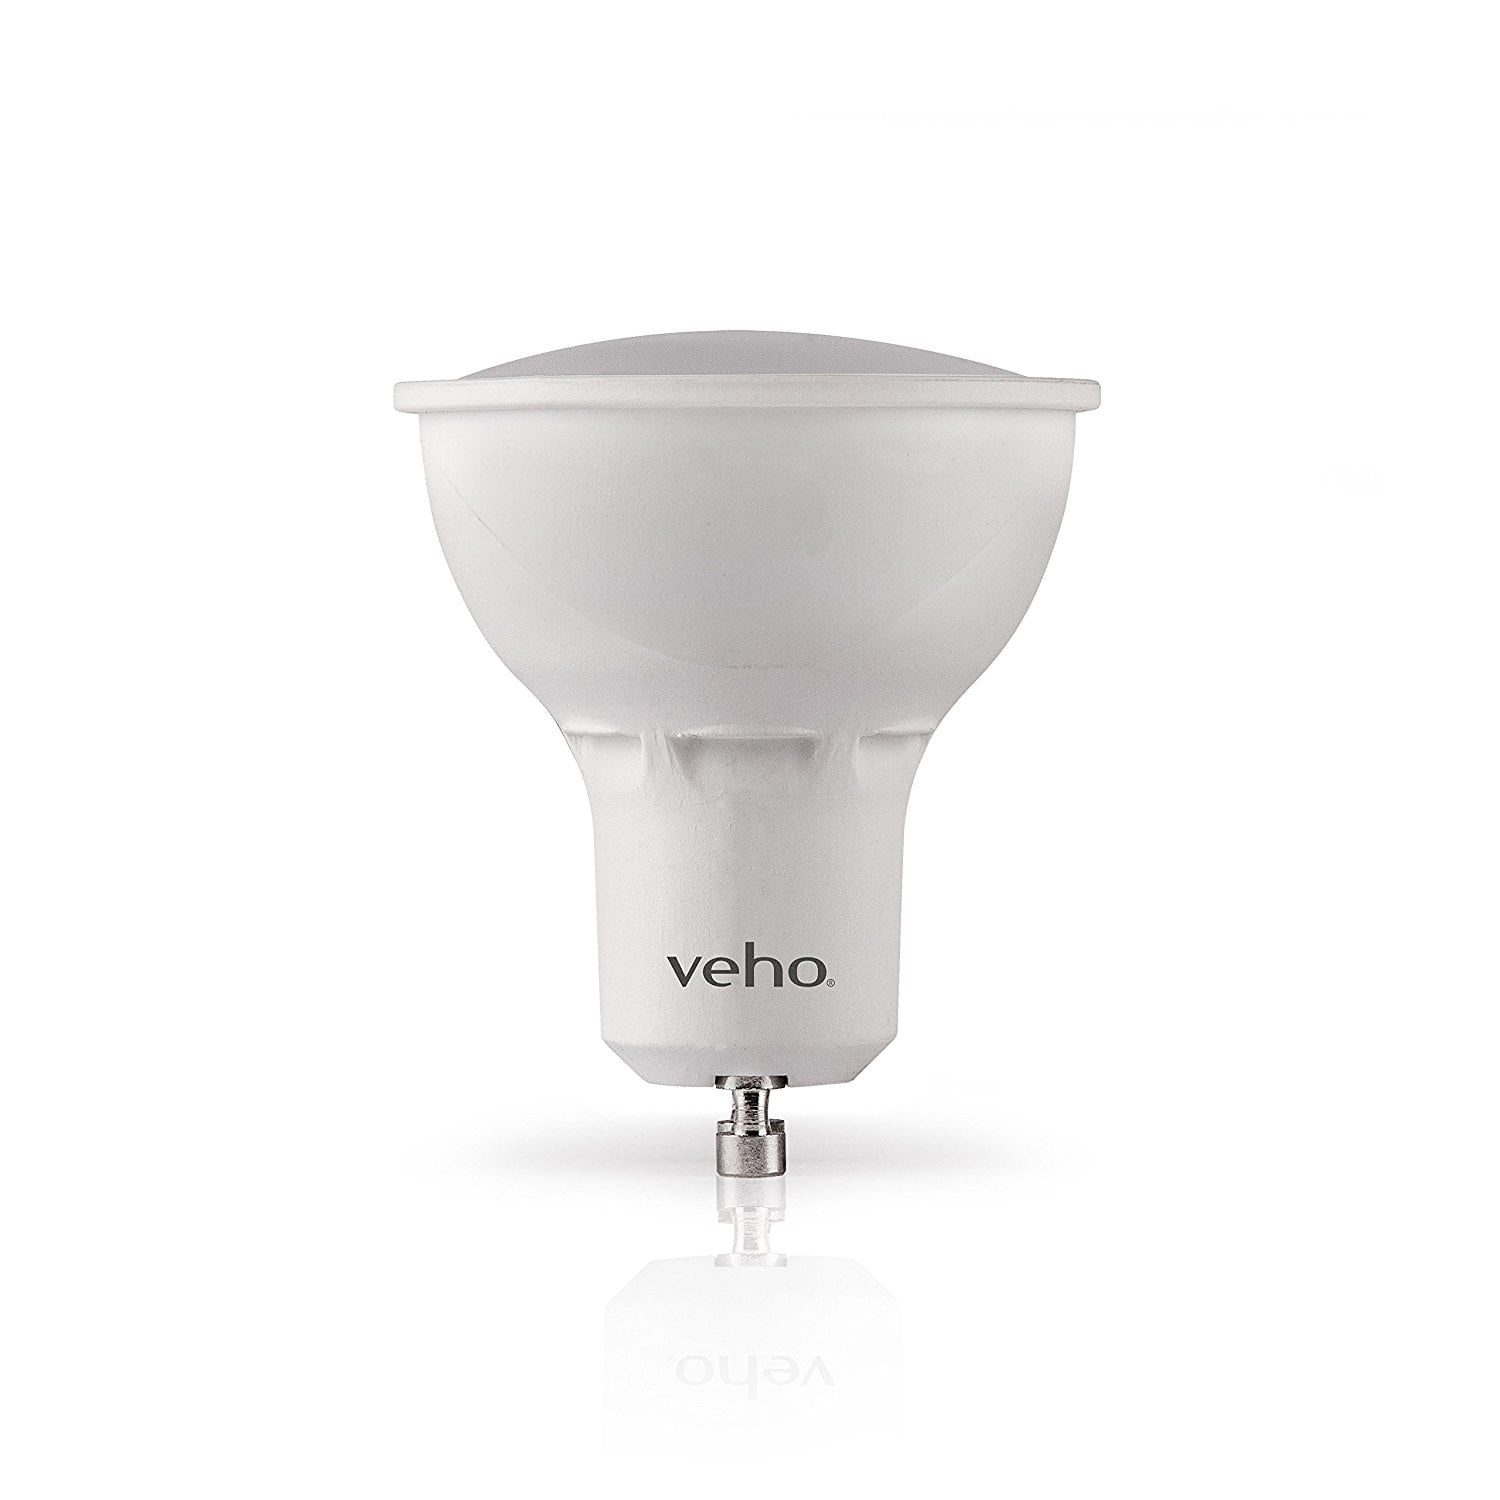 Veho Kasa Energy Smart Mood Lighting Colour LED Spotlight, 5W (VKB-004-GU10) - Walmart.com